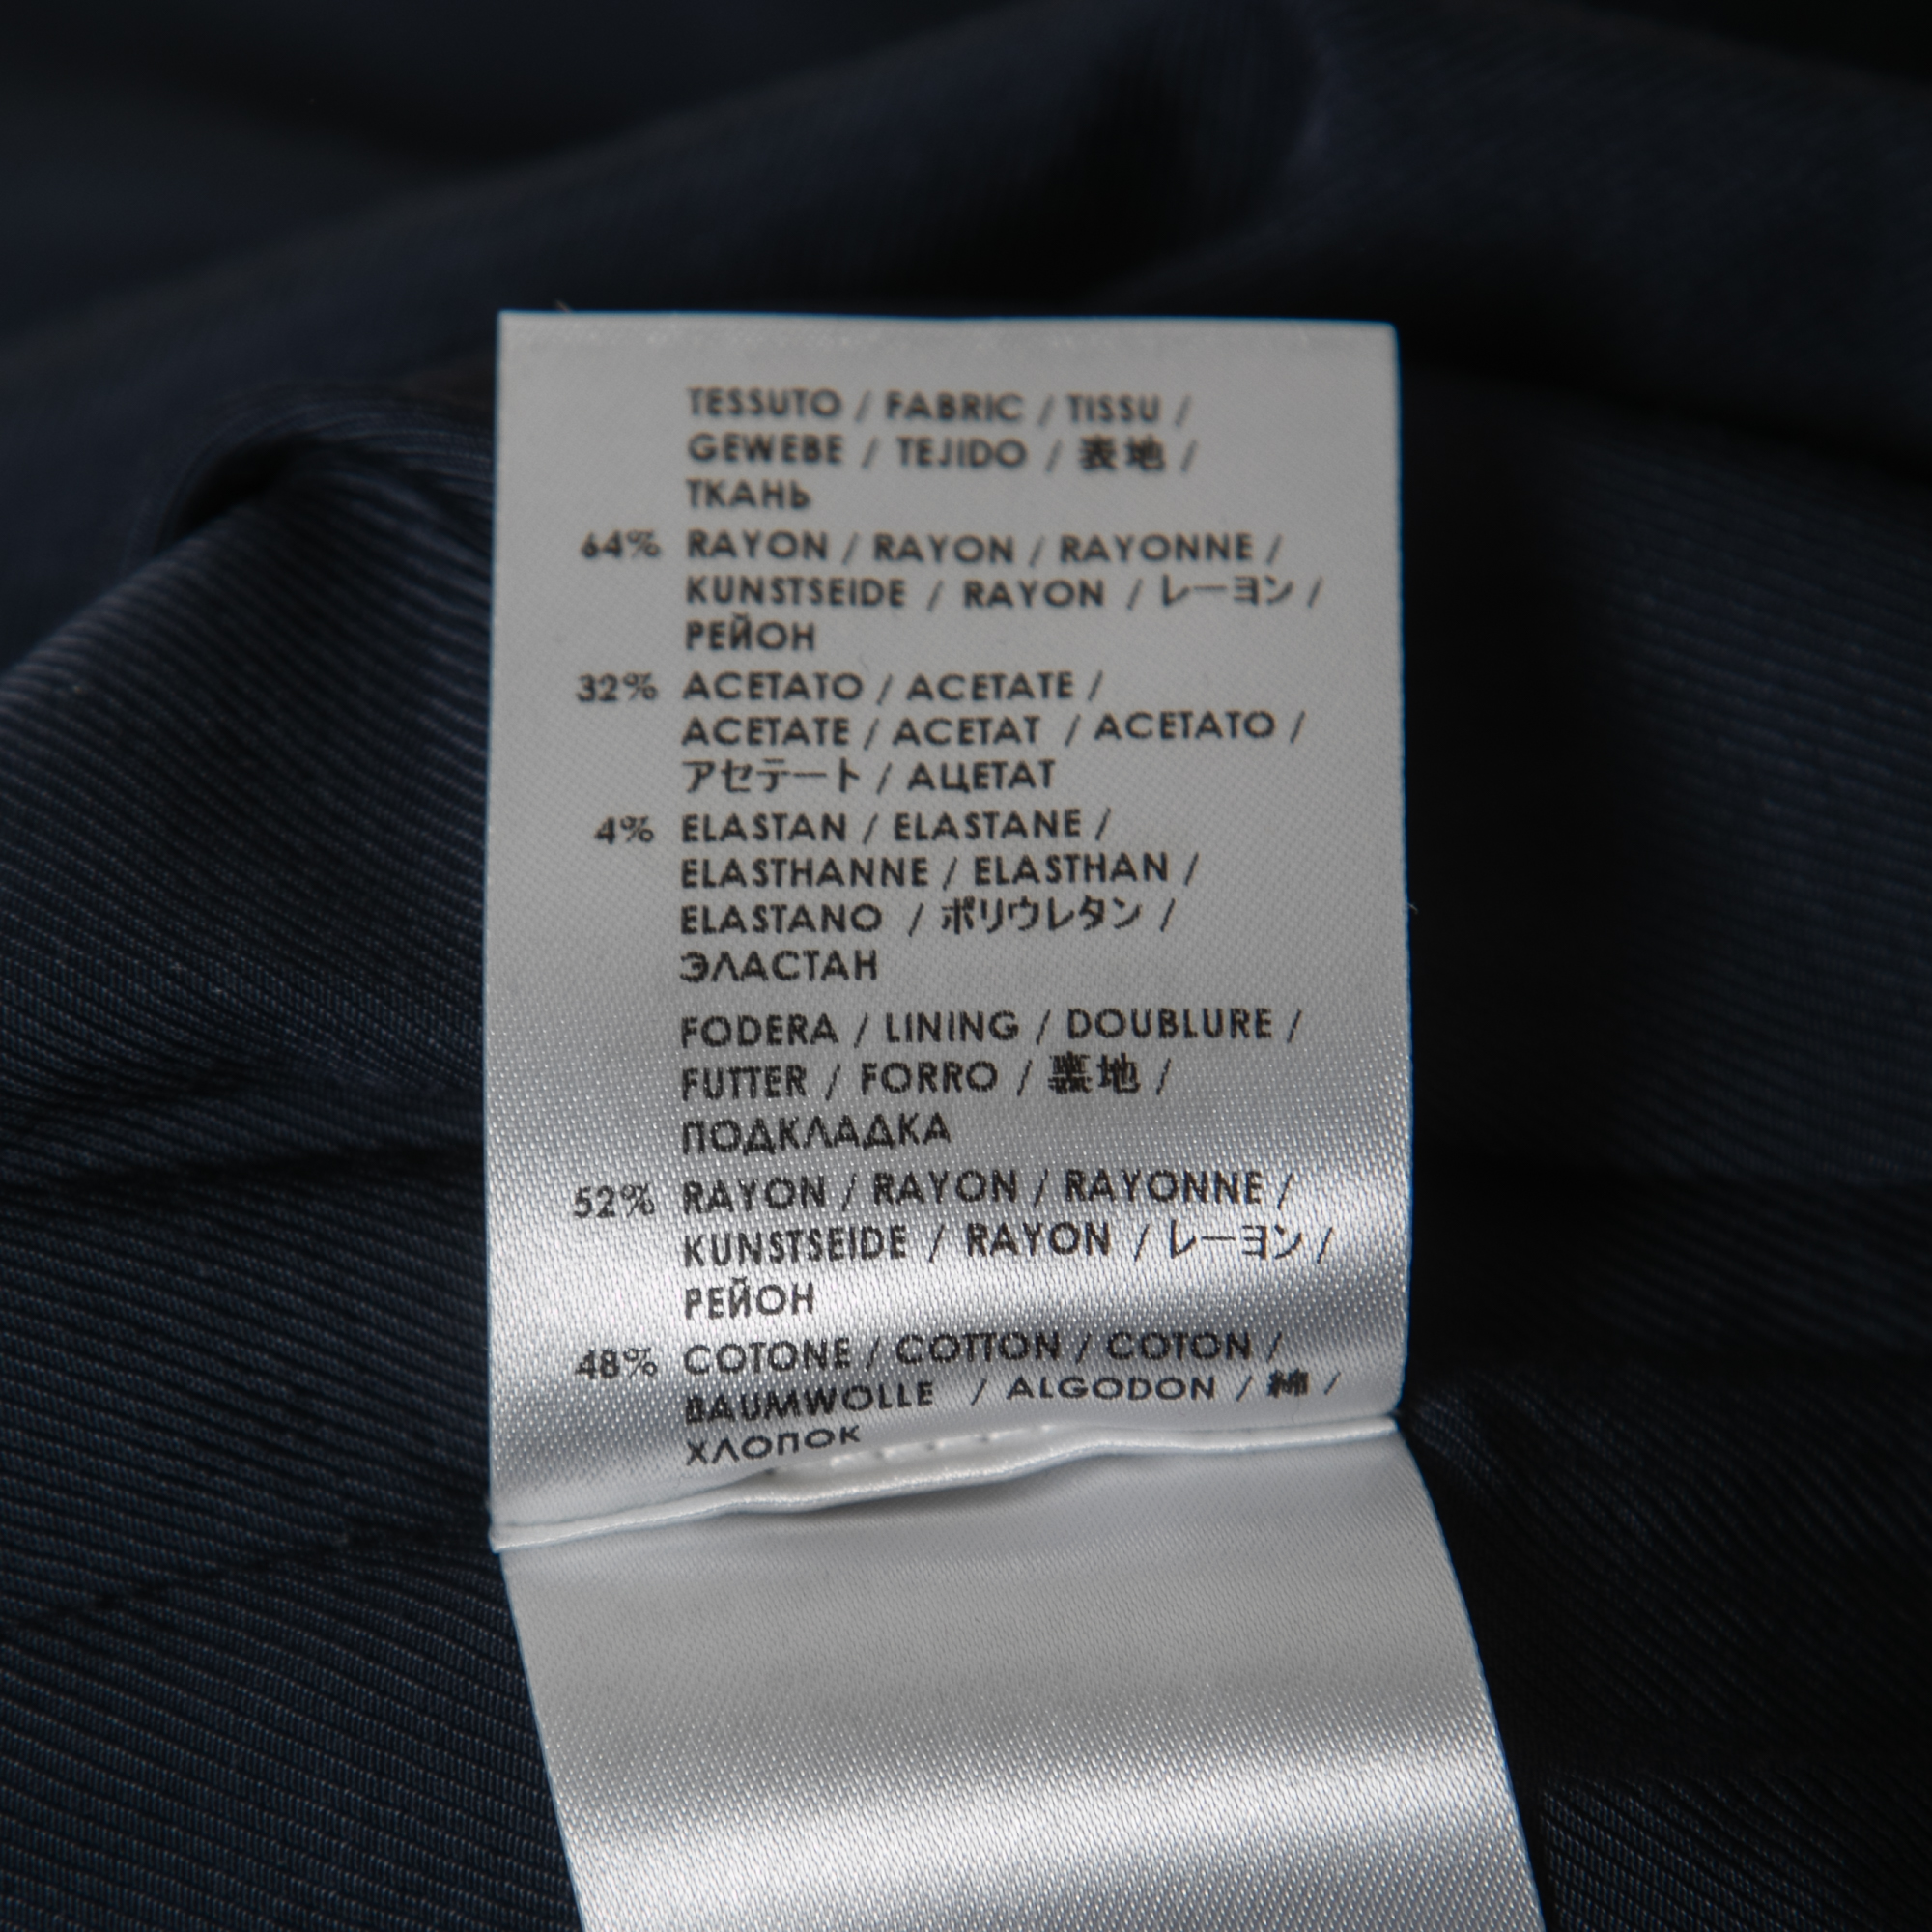 Stella McCartney Navy Blue Crepe Zip Detail Sleeveless Mini Dress XS